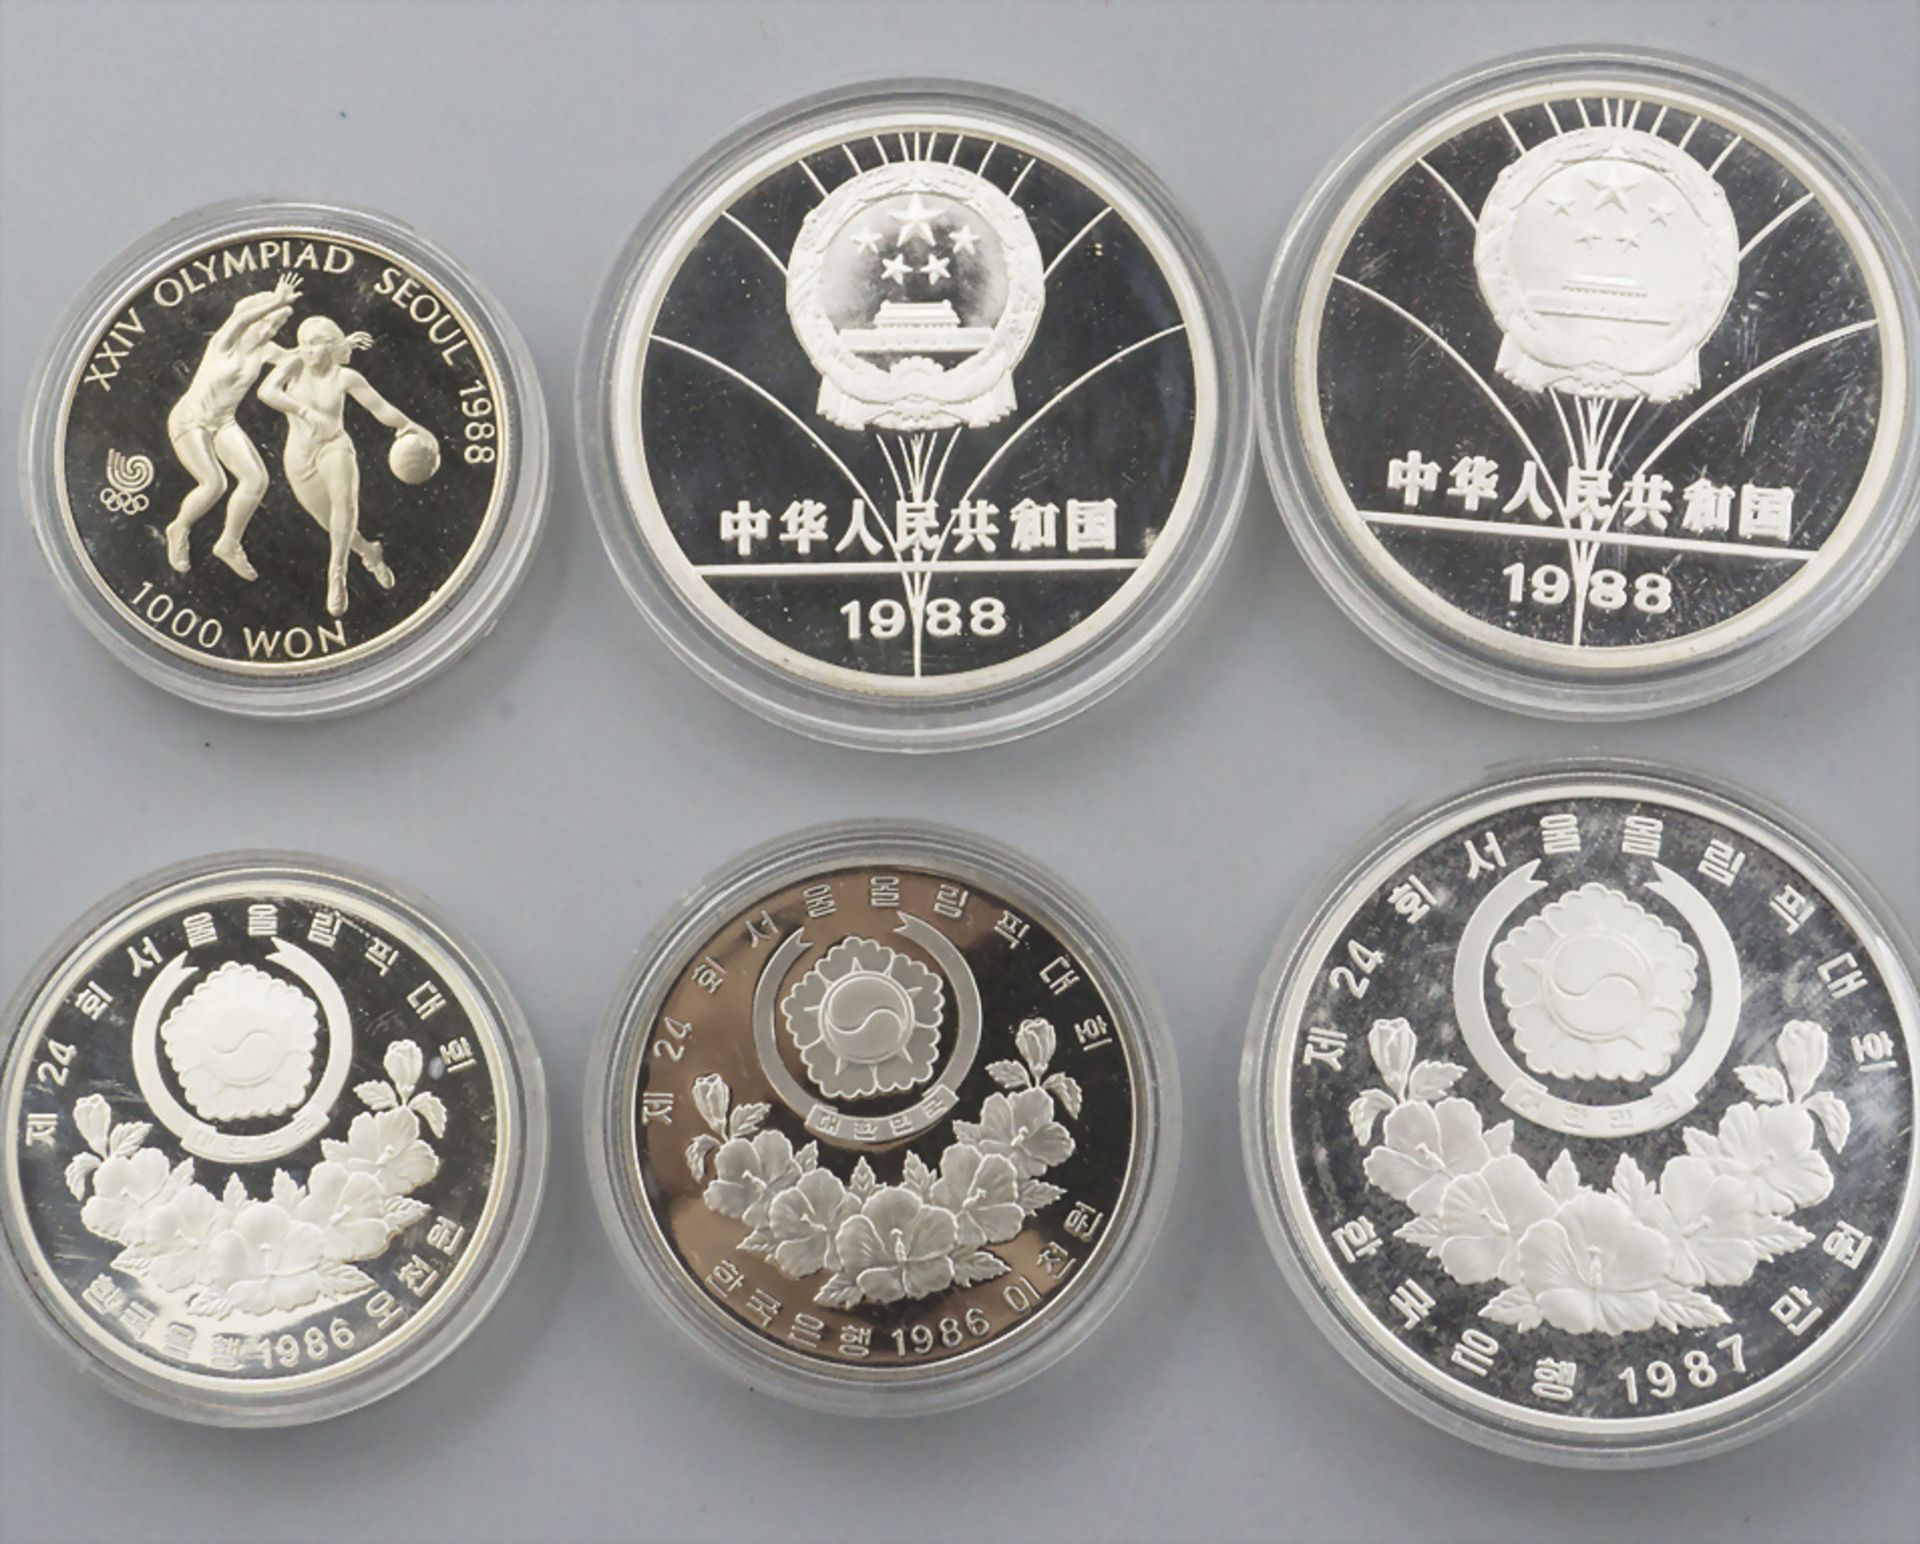 Sammlung Münzen aus China / A collection of Chinese coins